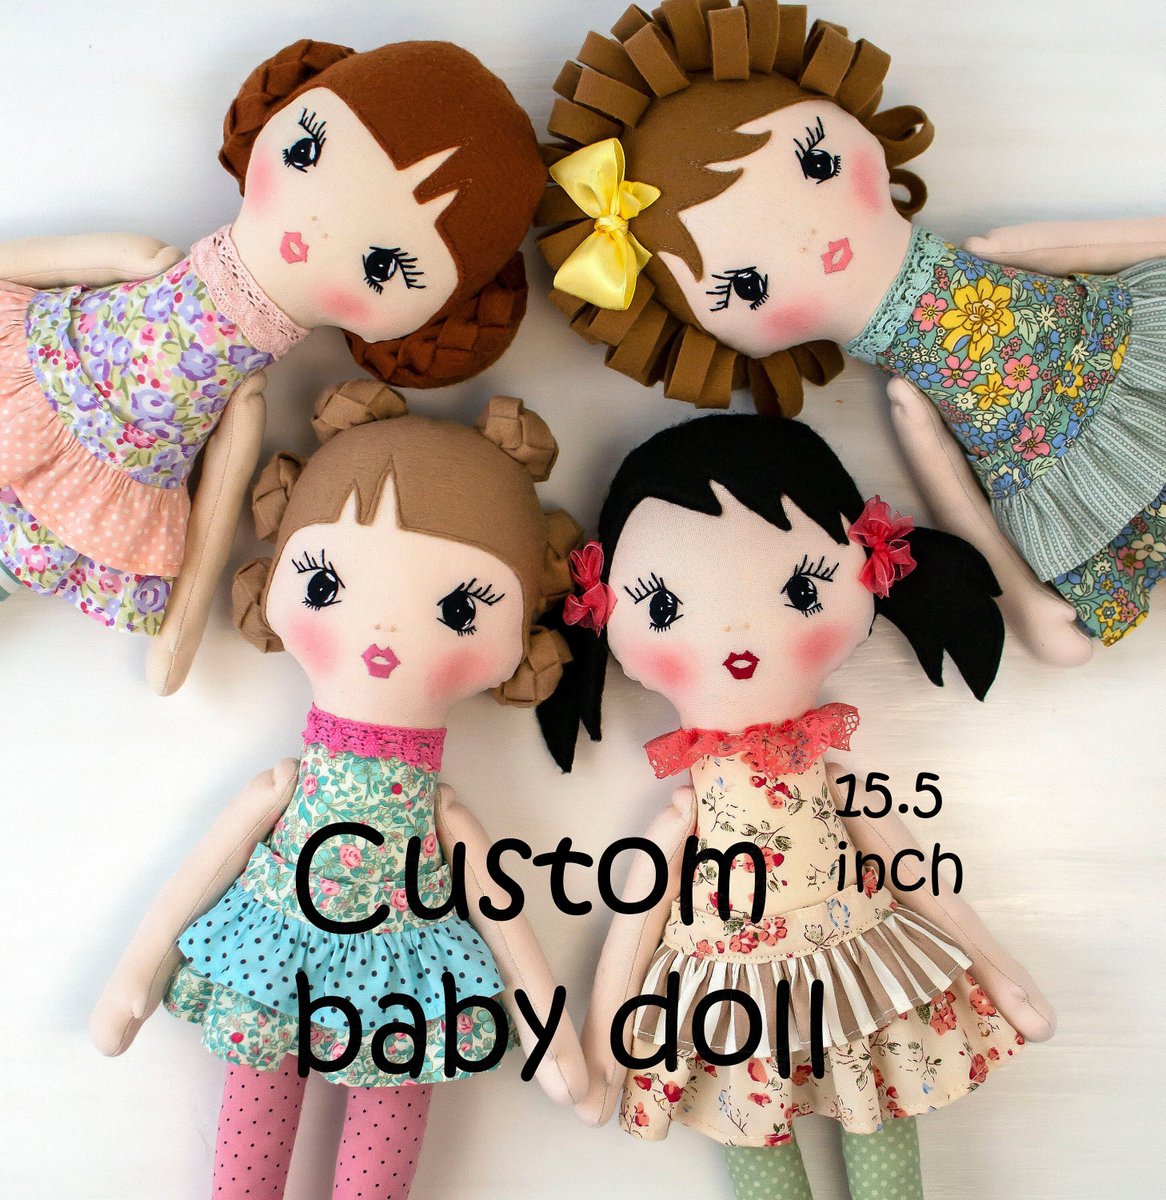 Custom rag doll Personalized doll Cloth doll handmade etsy.me/3NgTtPk #rainbow #birthday #customdoll #handmadedoll #personalizeddoll #ragdoll #clothdoll #fabricdoll #babydoll